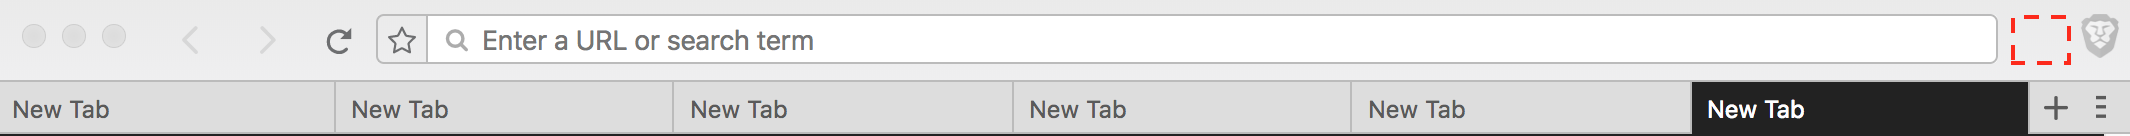 Brave browser has good targeting at large window sizes